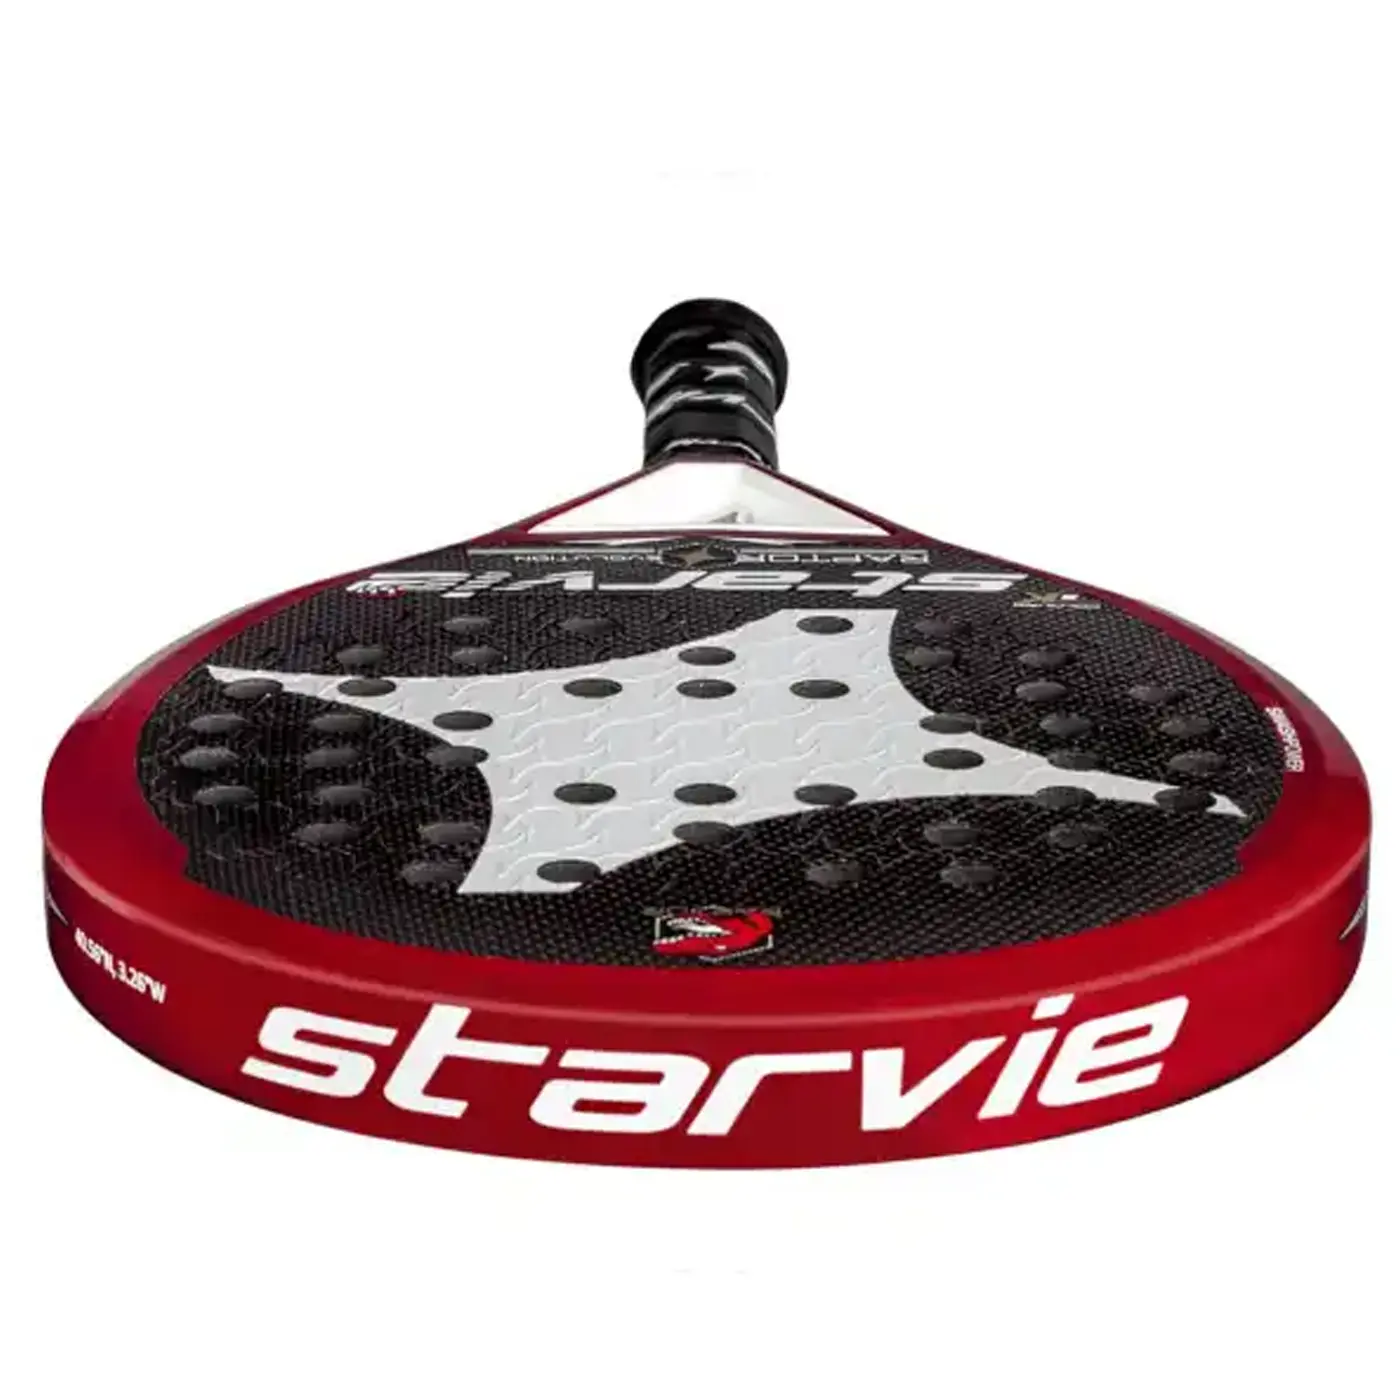 Starvie Raptor Evolution Padel Racket, Best Starvie Padel Rackets Image 3